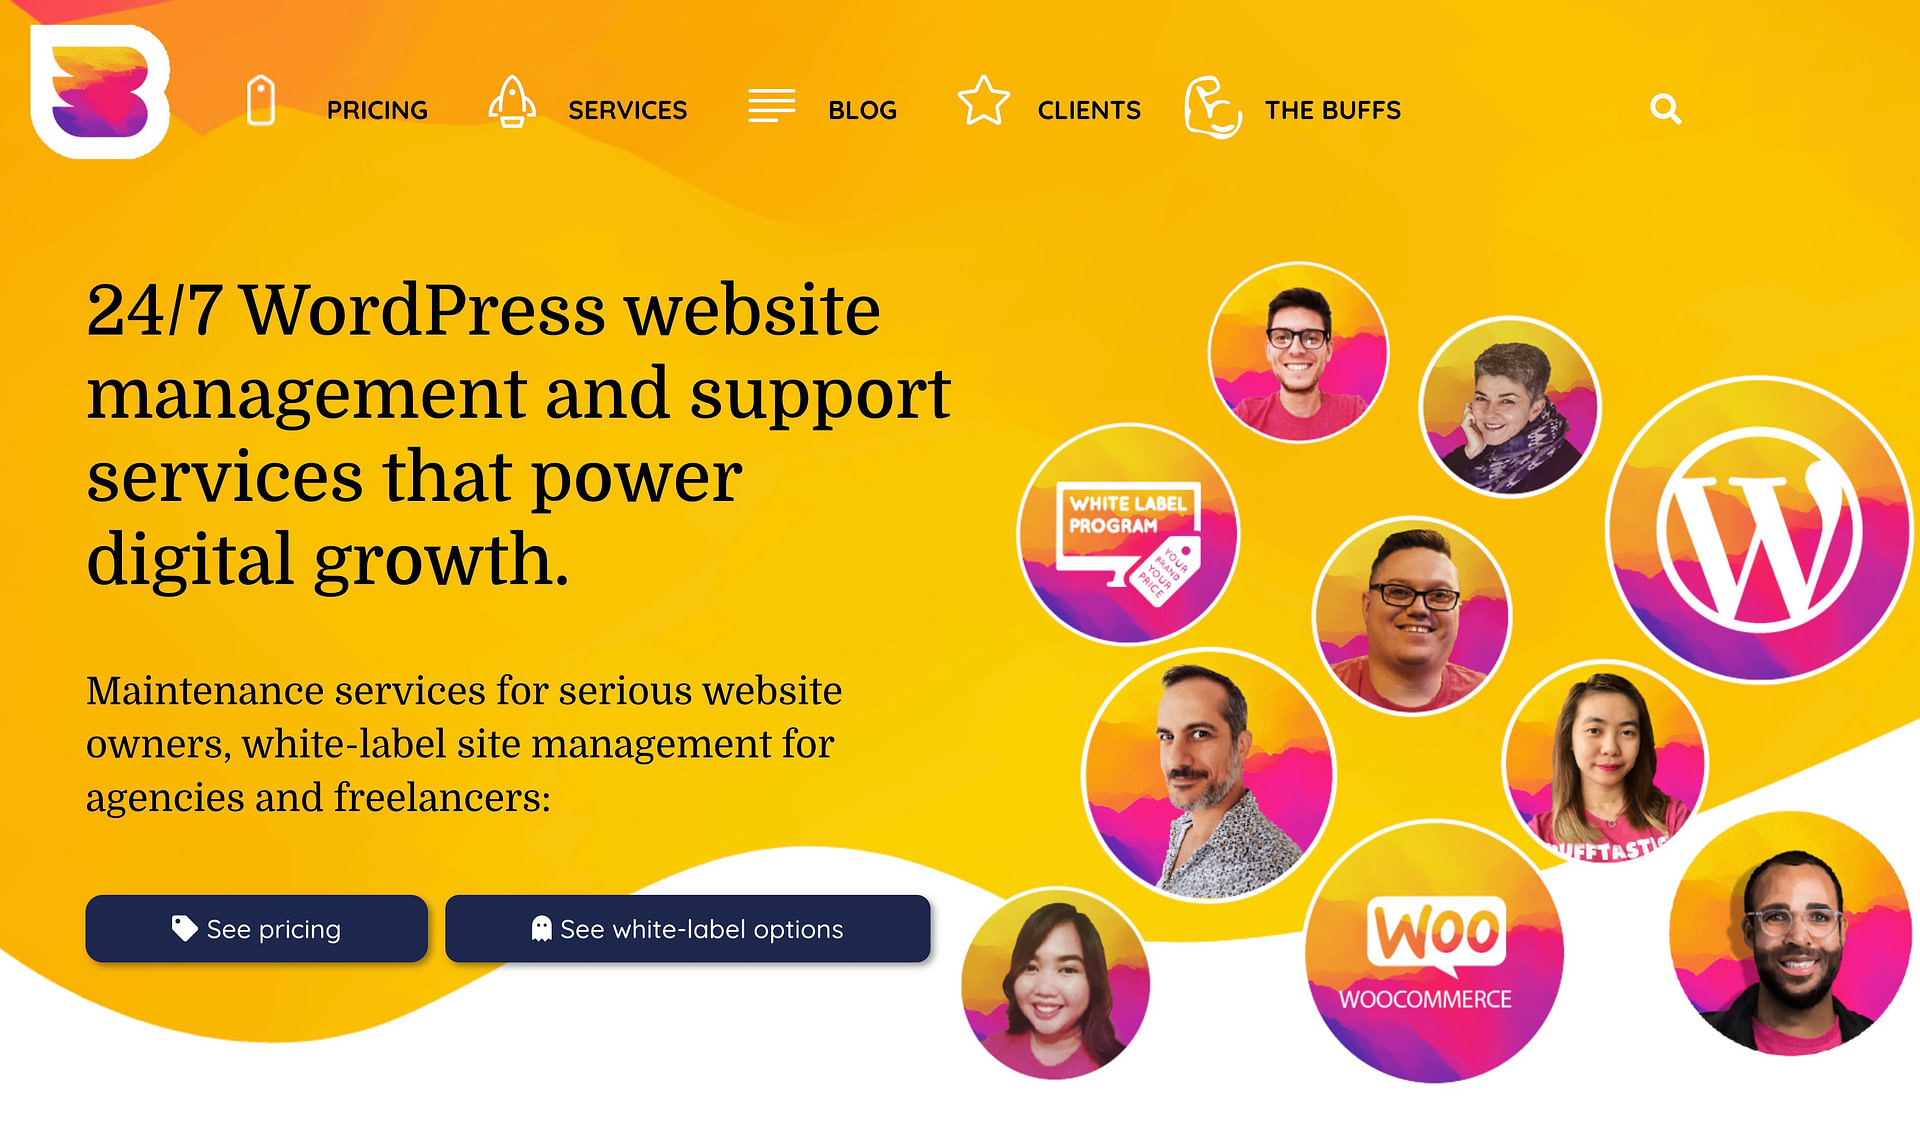 WPBuffs is an example of a WordPress maintenance service